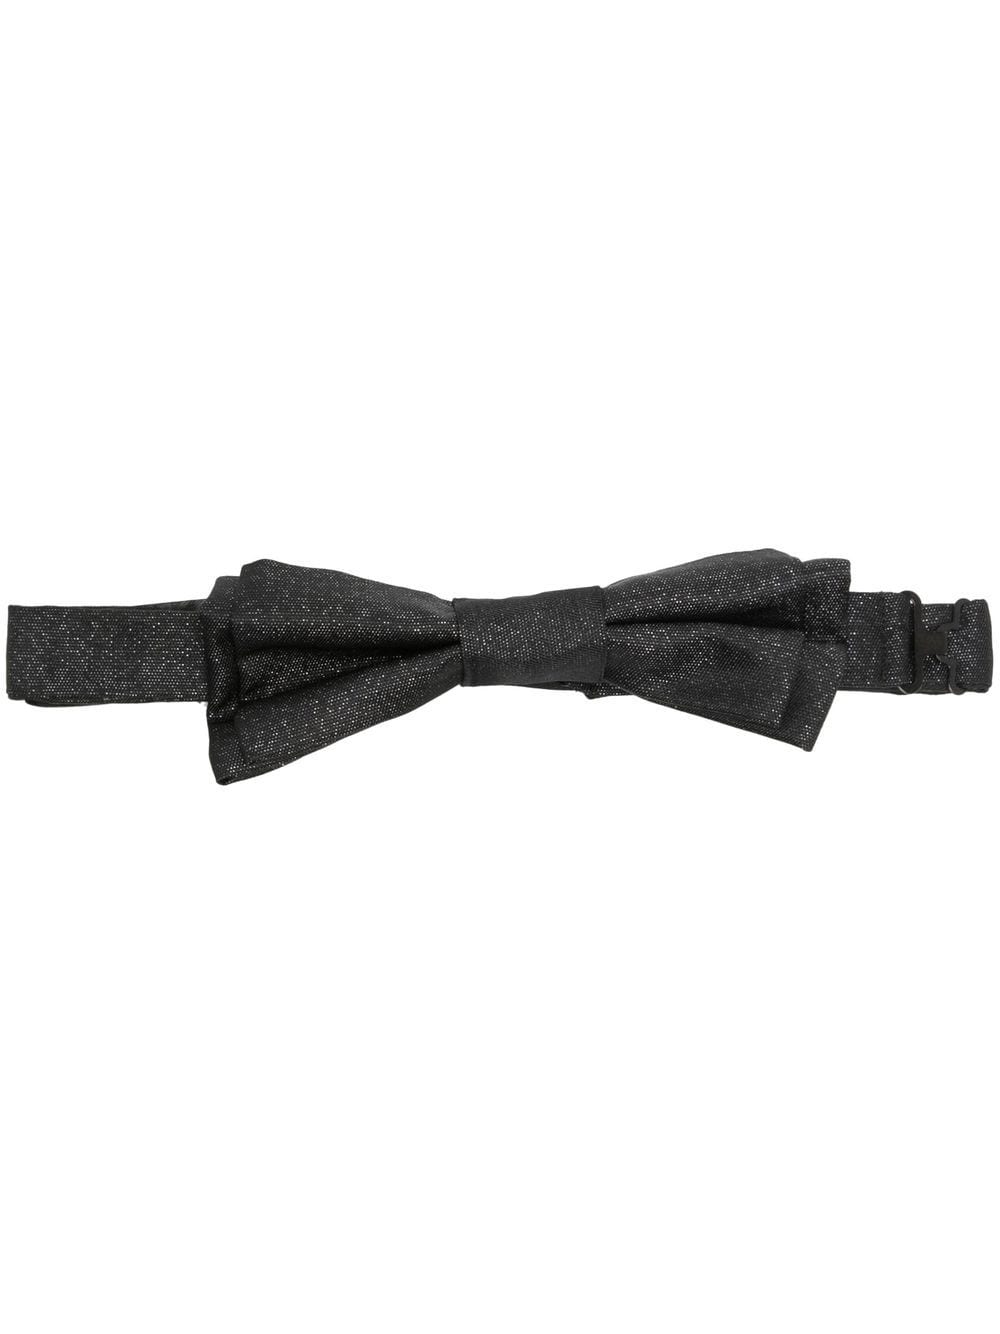 Paul Smith glitter detail bow tie - Black von Paul Smith